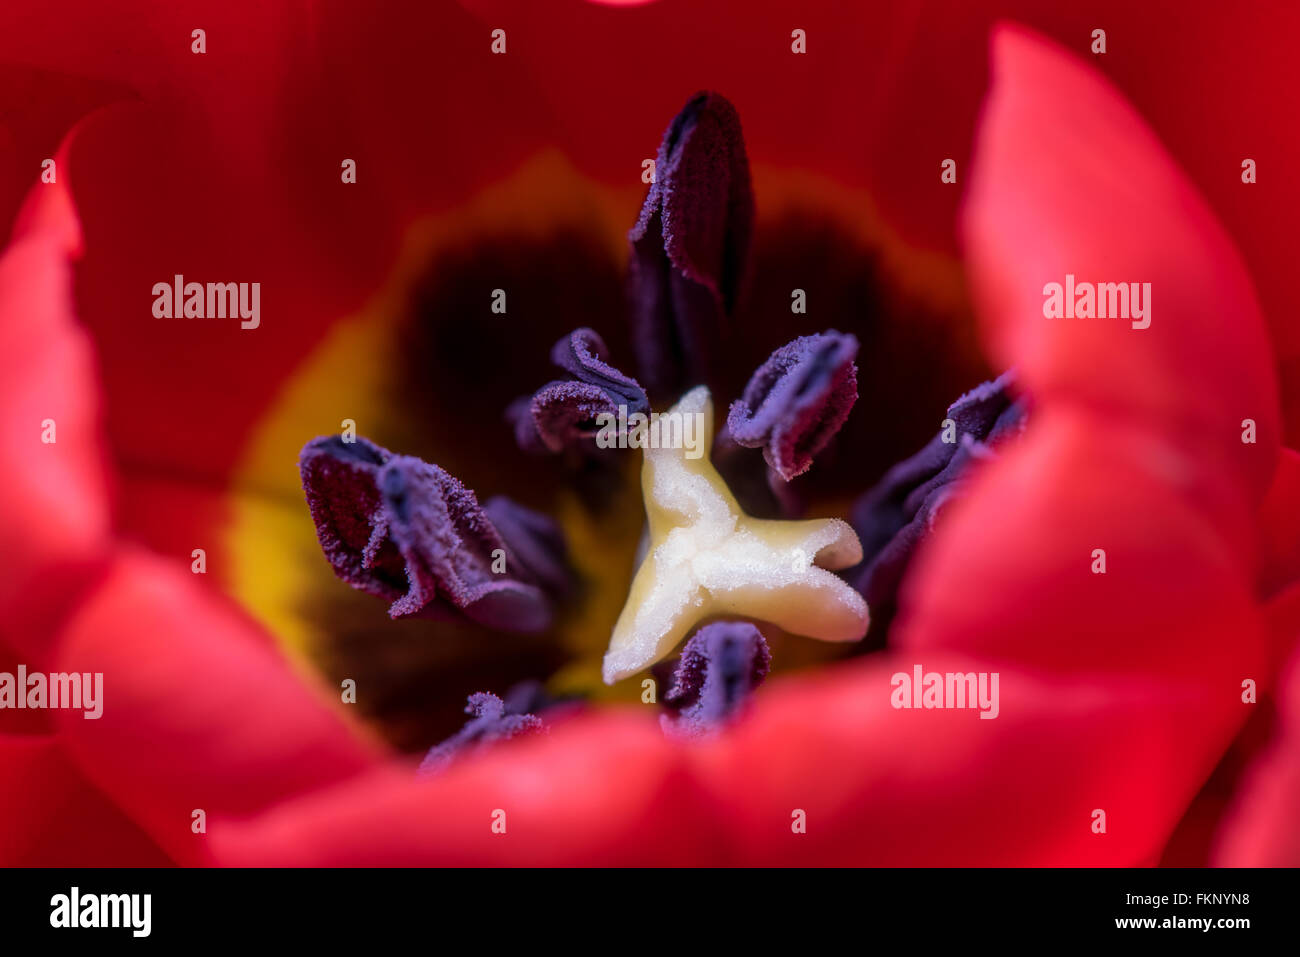 Antera dentro de un tulipán rojo con un enfoque macro Foto de stock